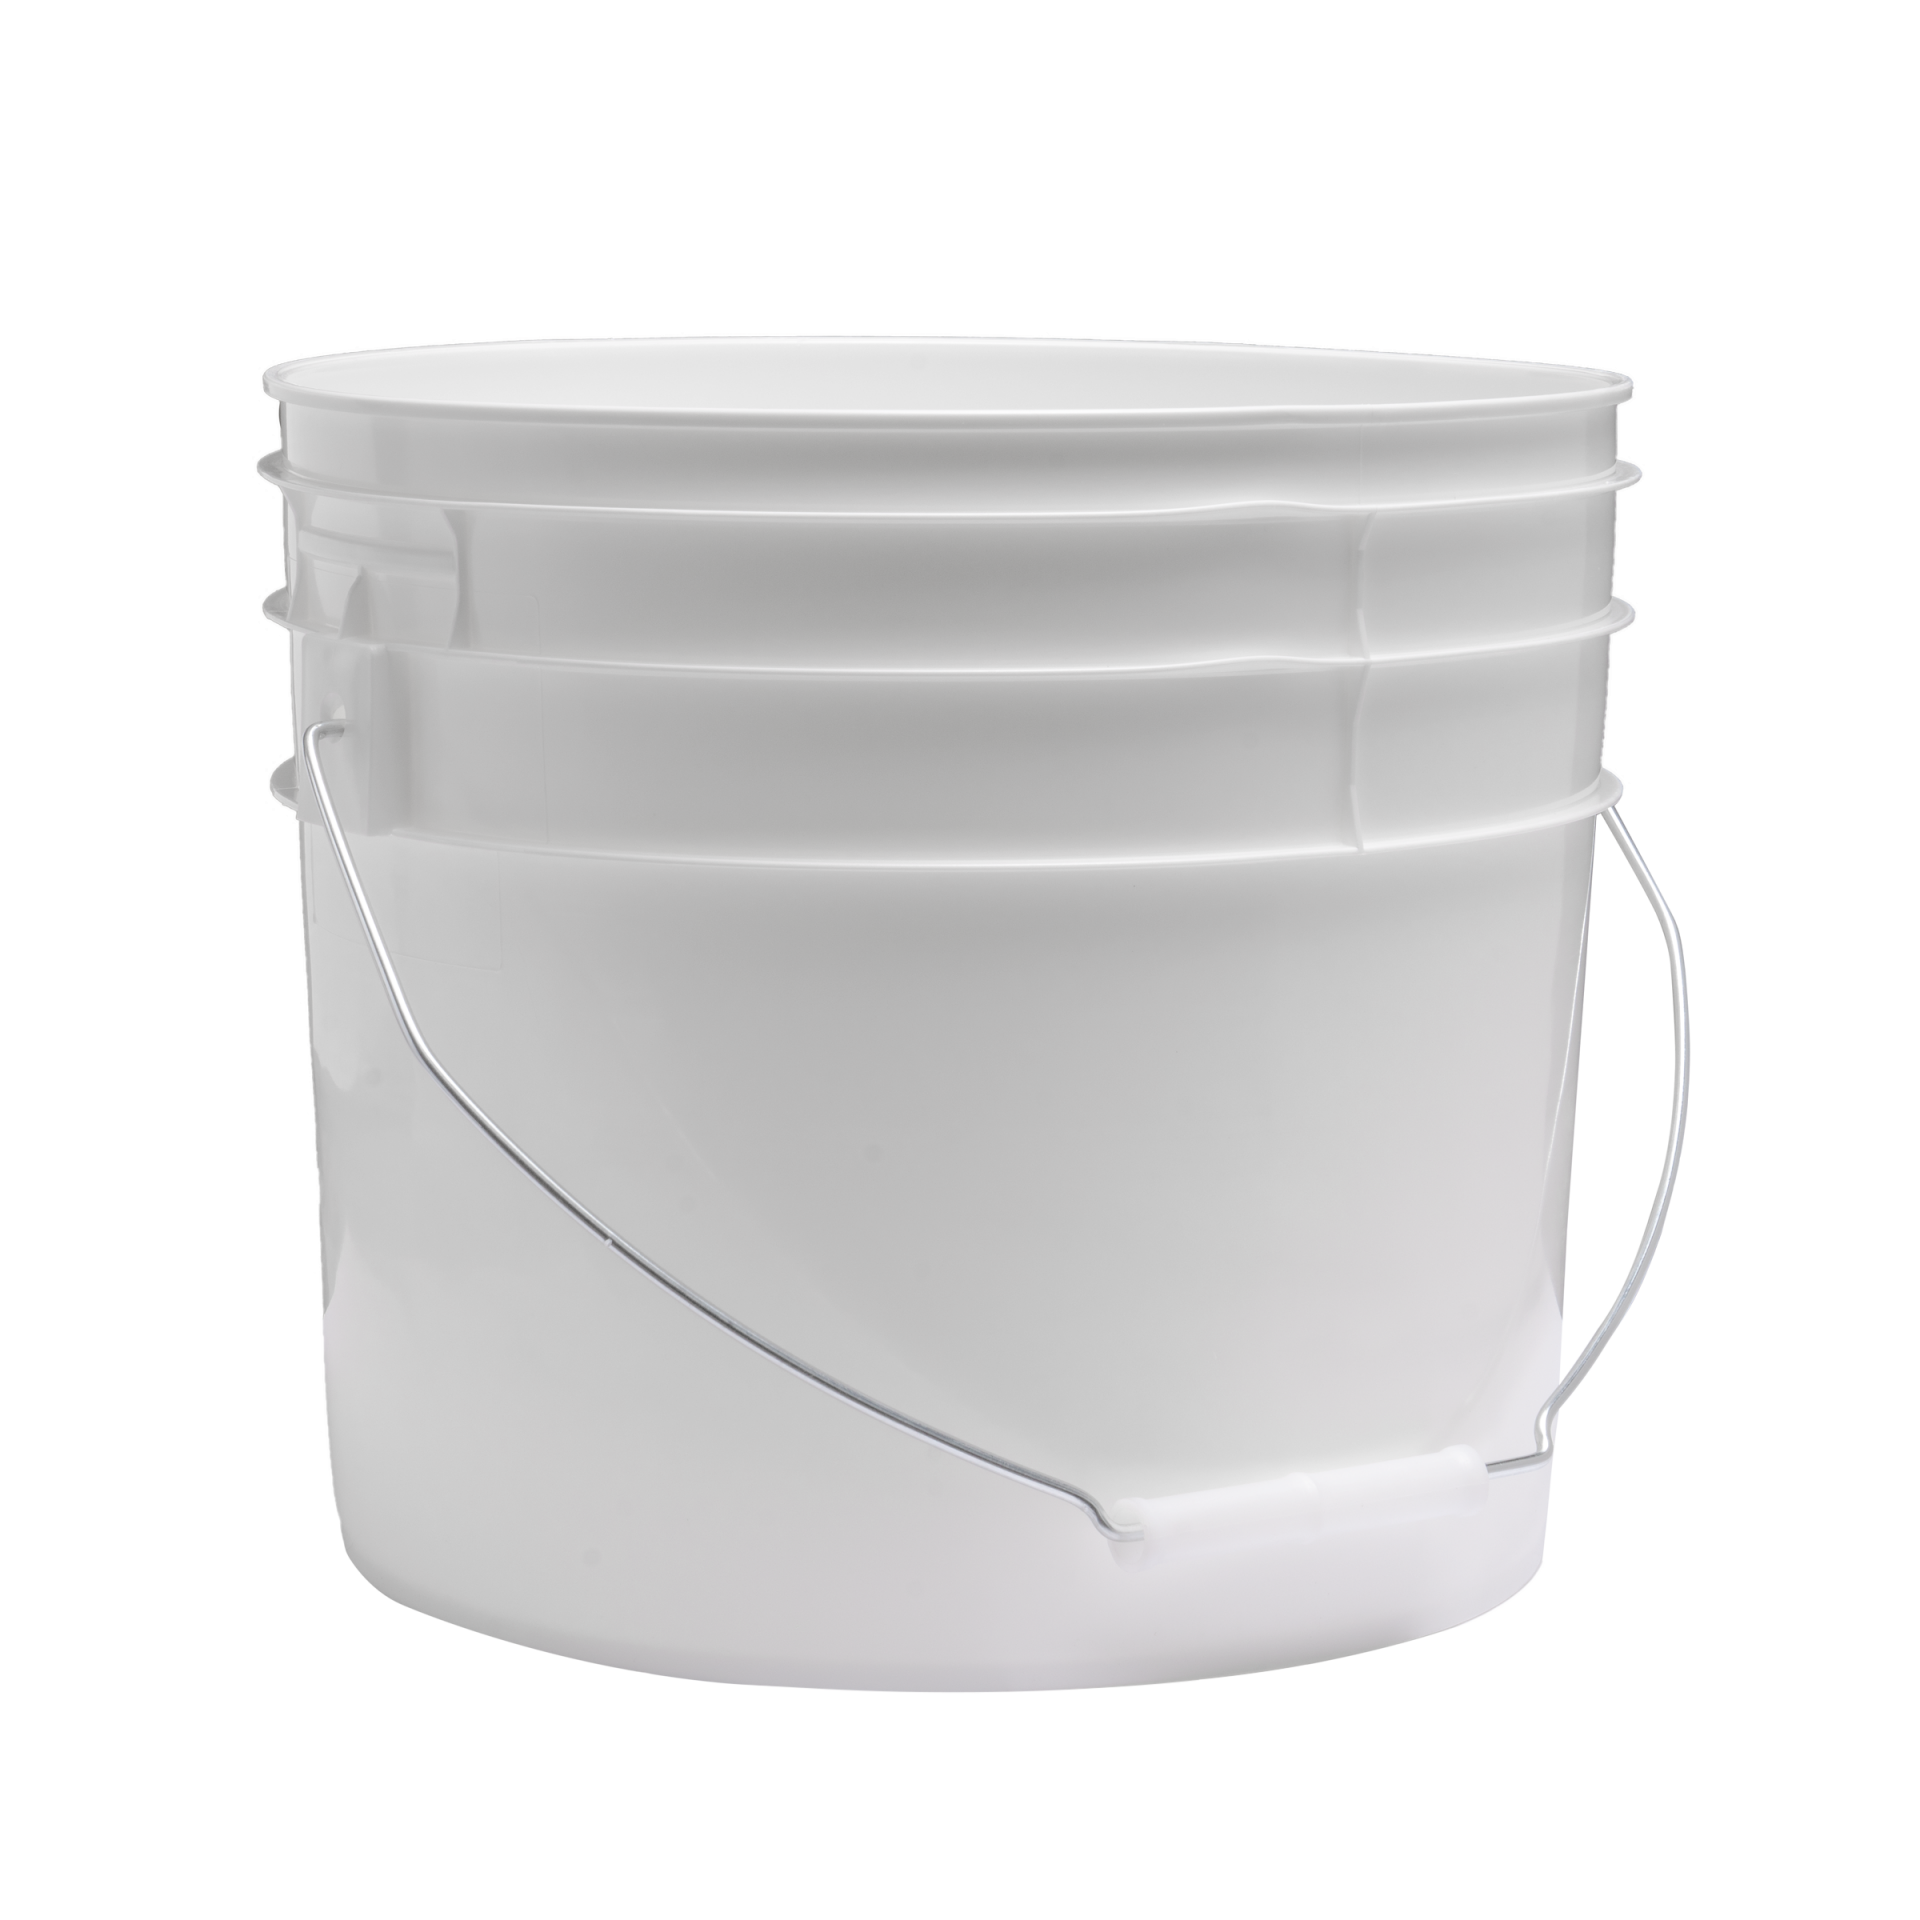 3 gallon pail natural handle